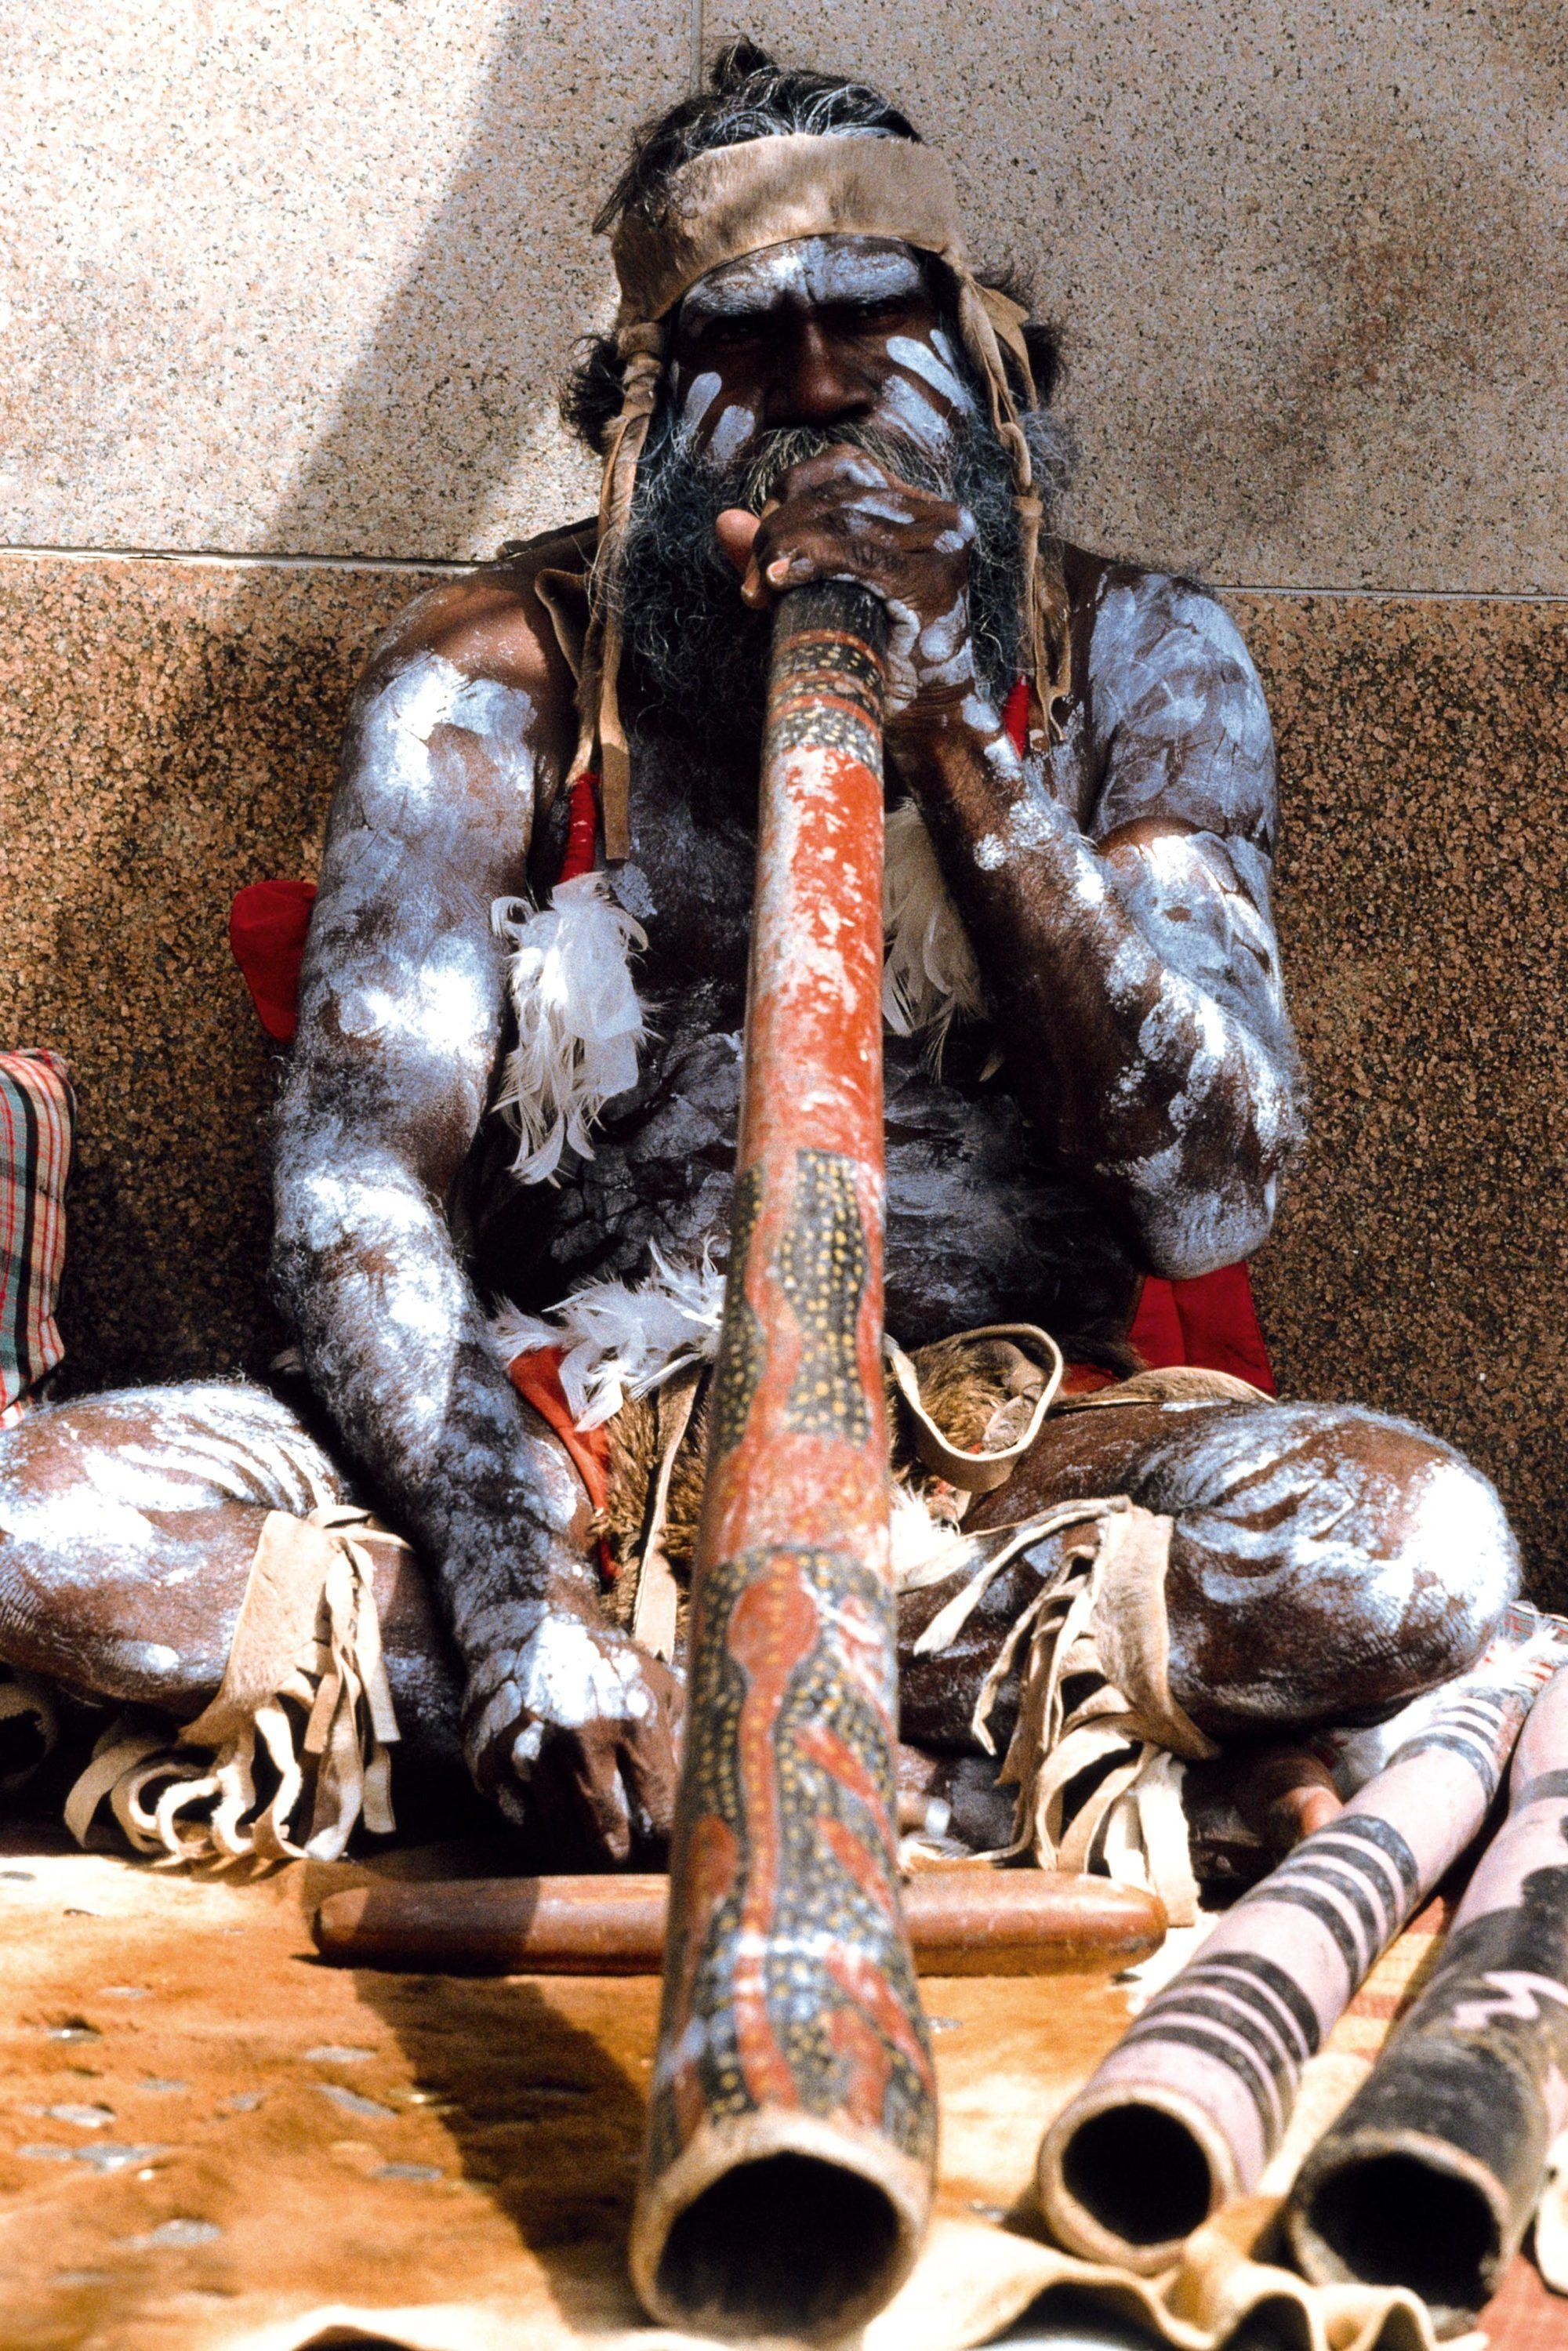 A didgeridoo player, Australia